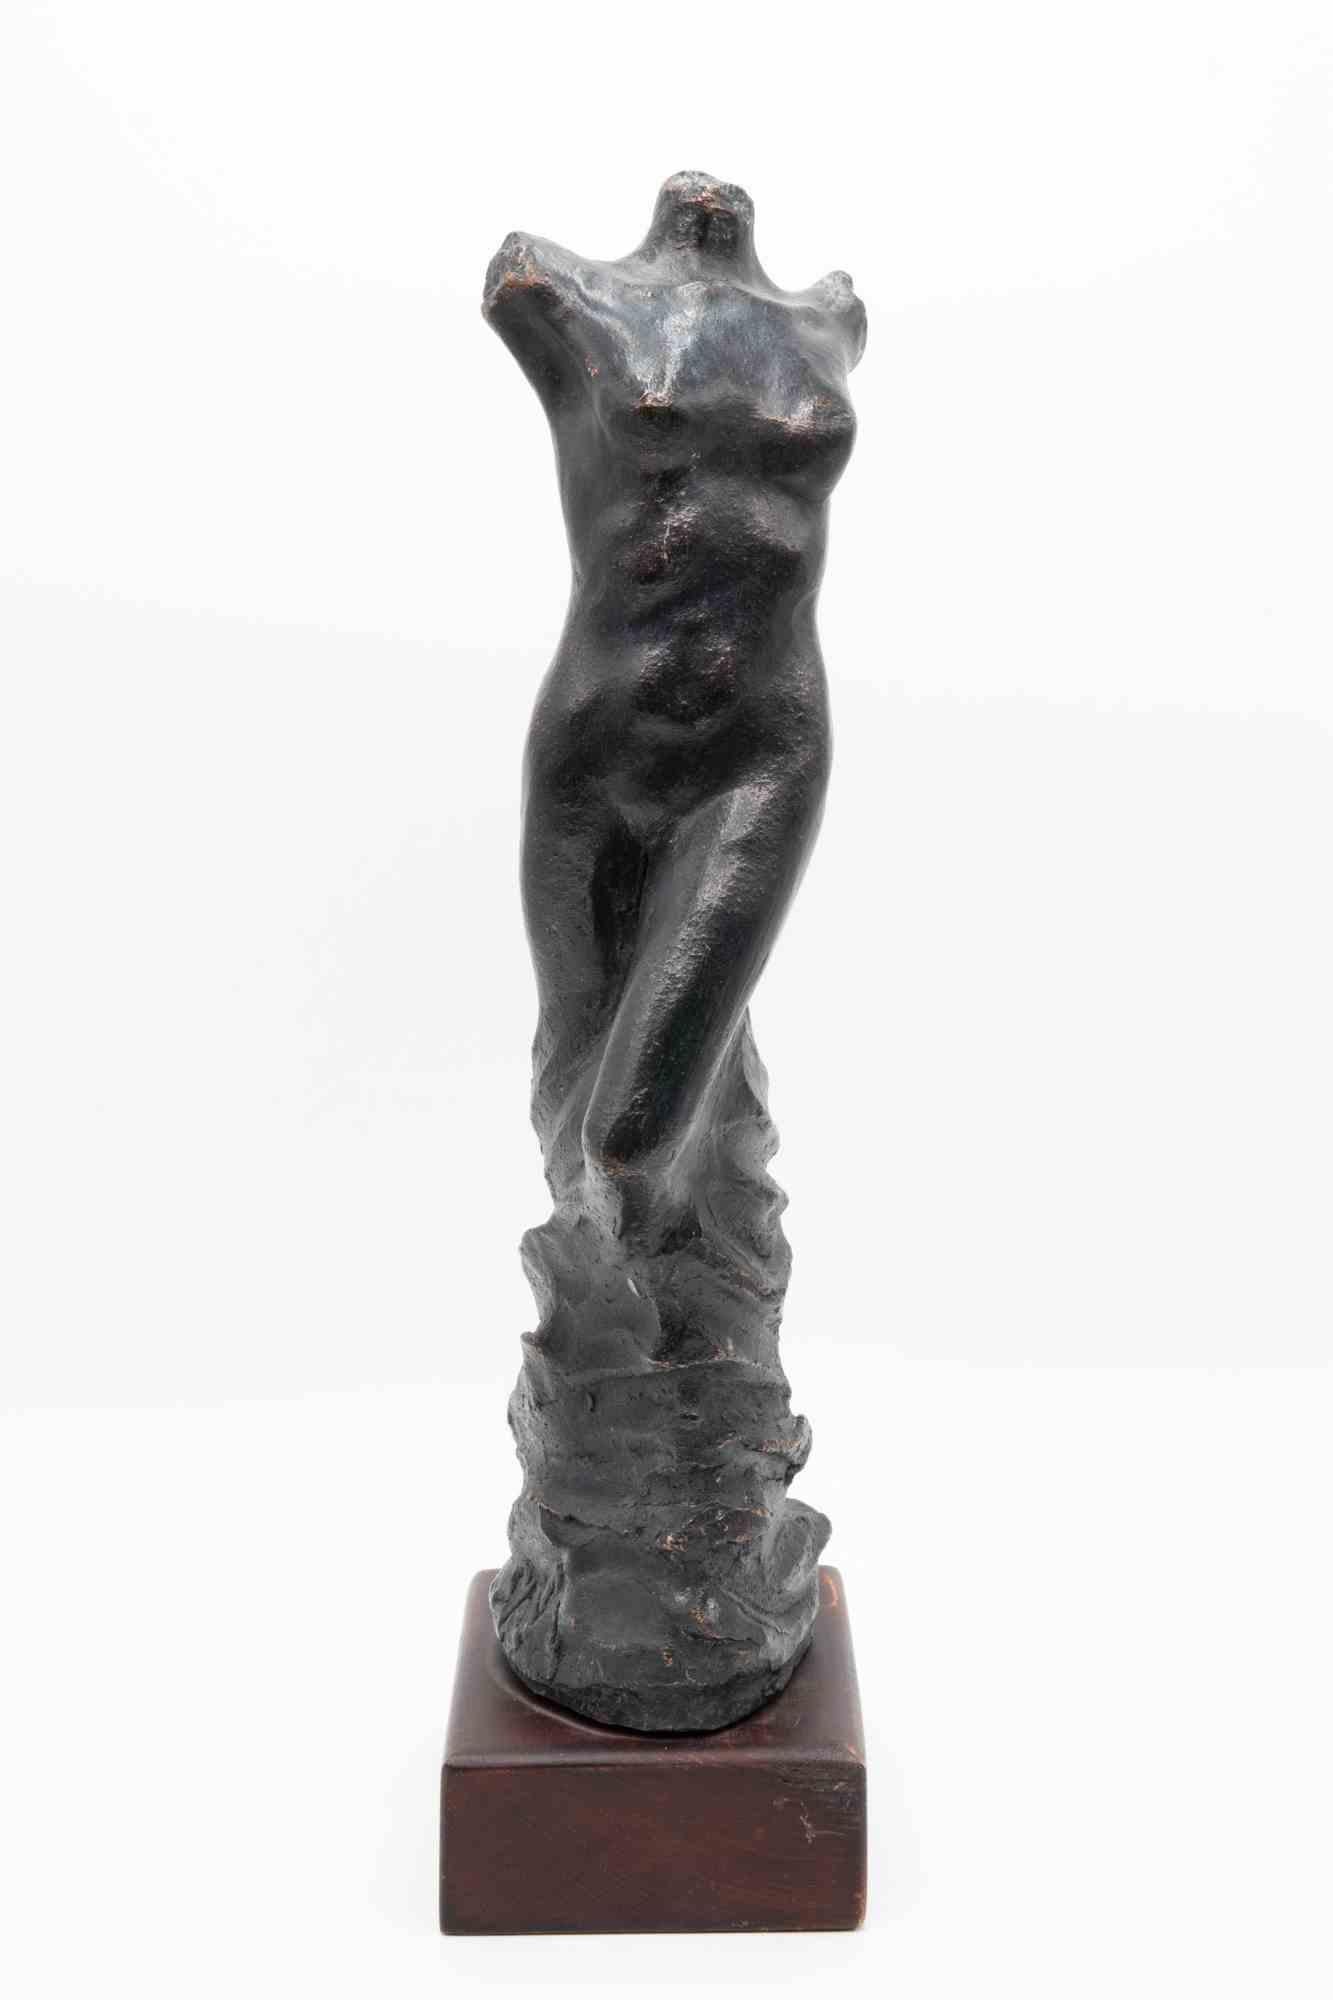 Statue of a Woman - Bronze Sculpture by Fabrizio Savi - 2012